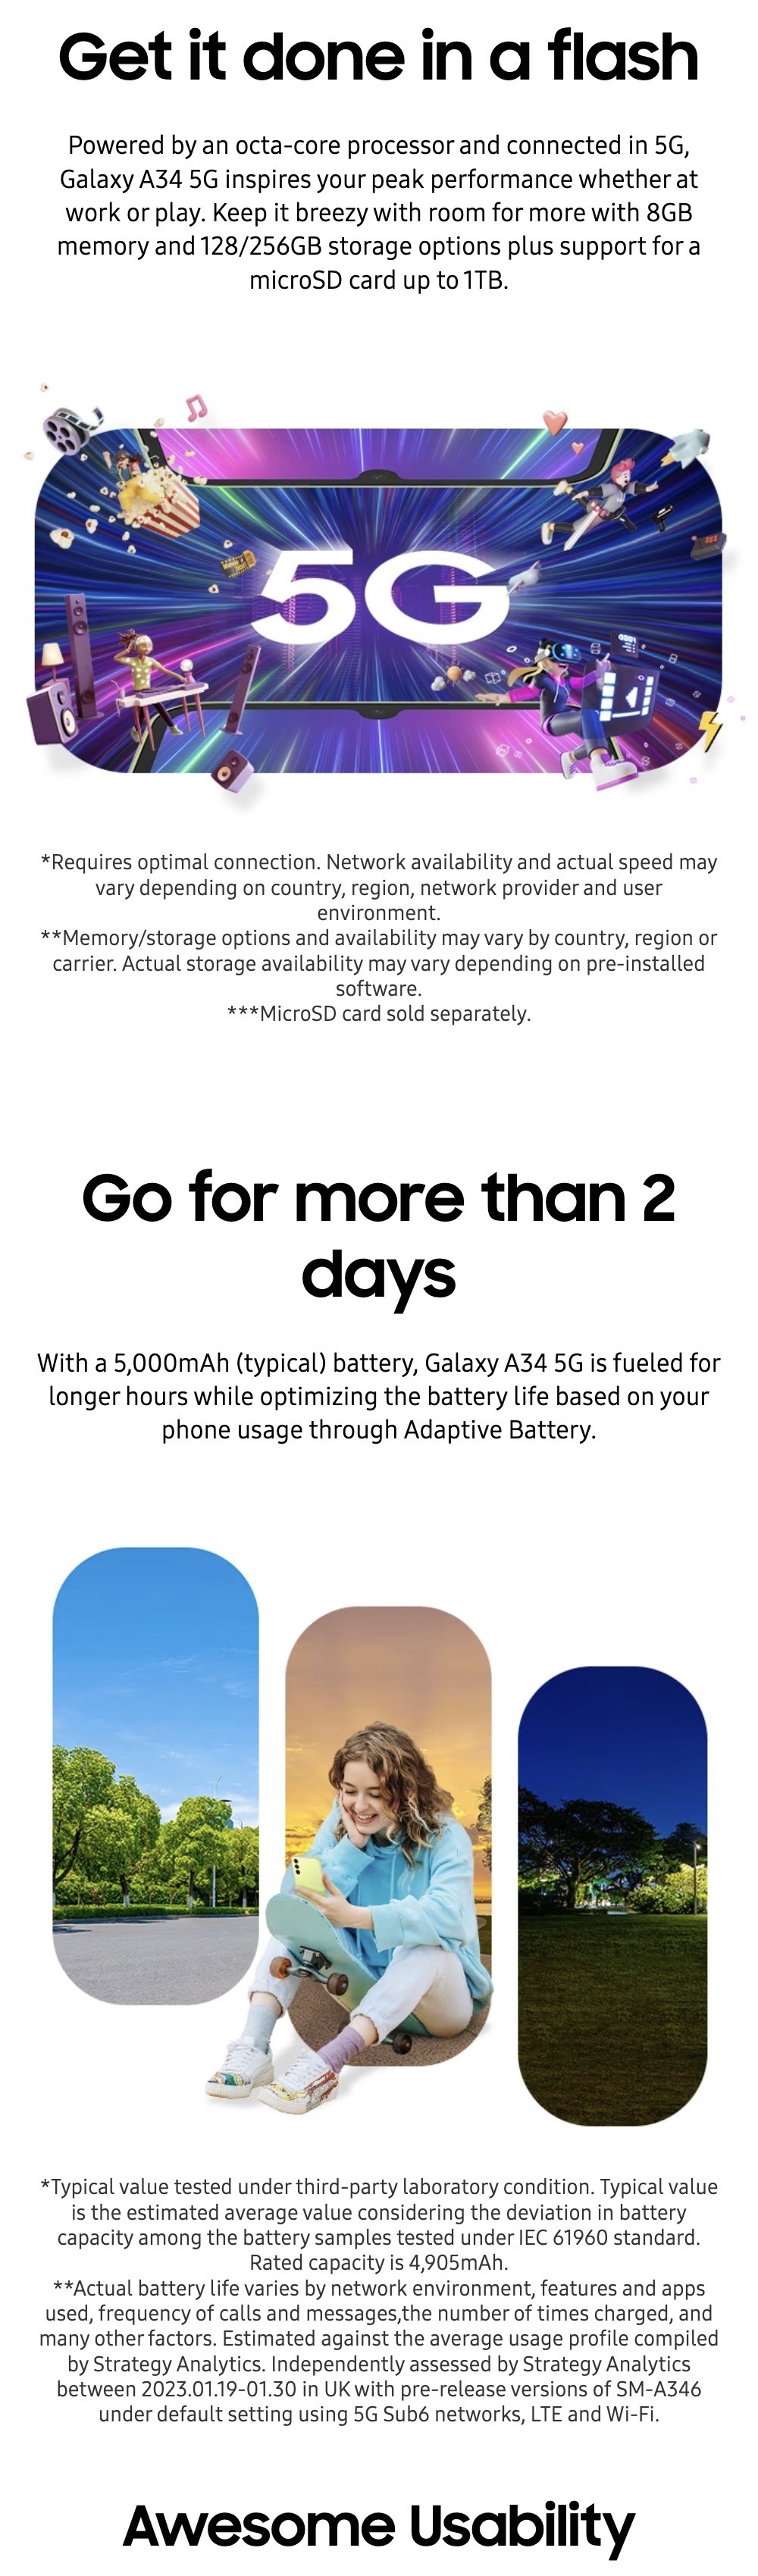 Samsung-Galaxy-A34-5G-Image-Description-5